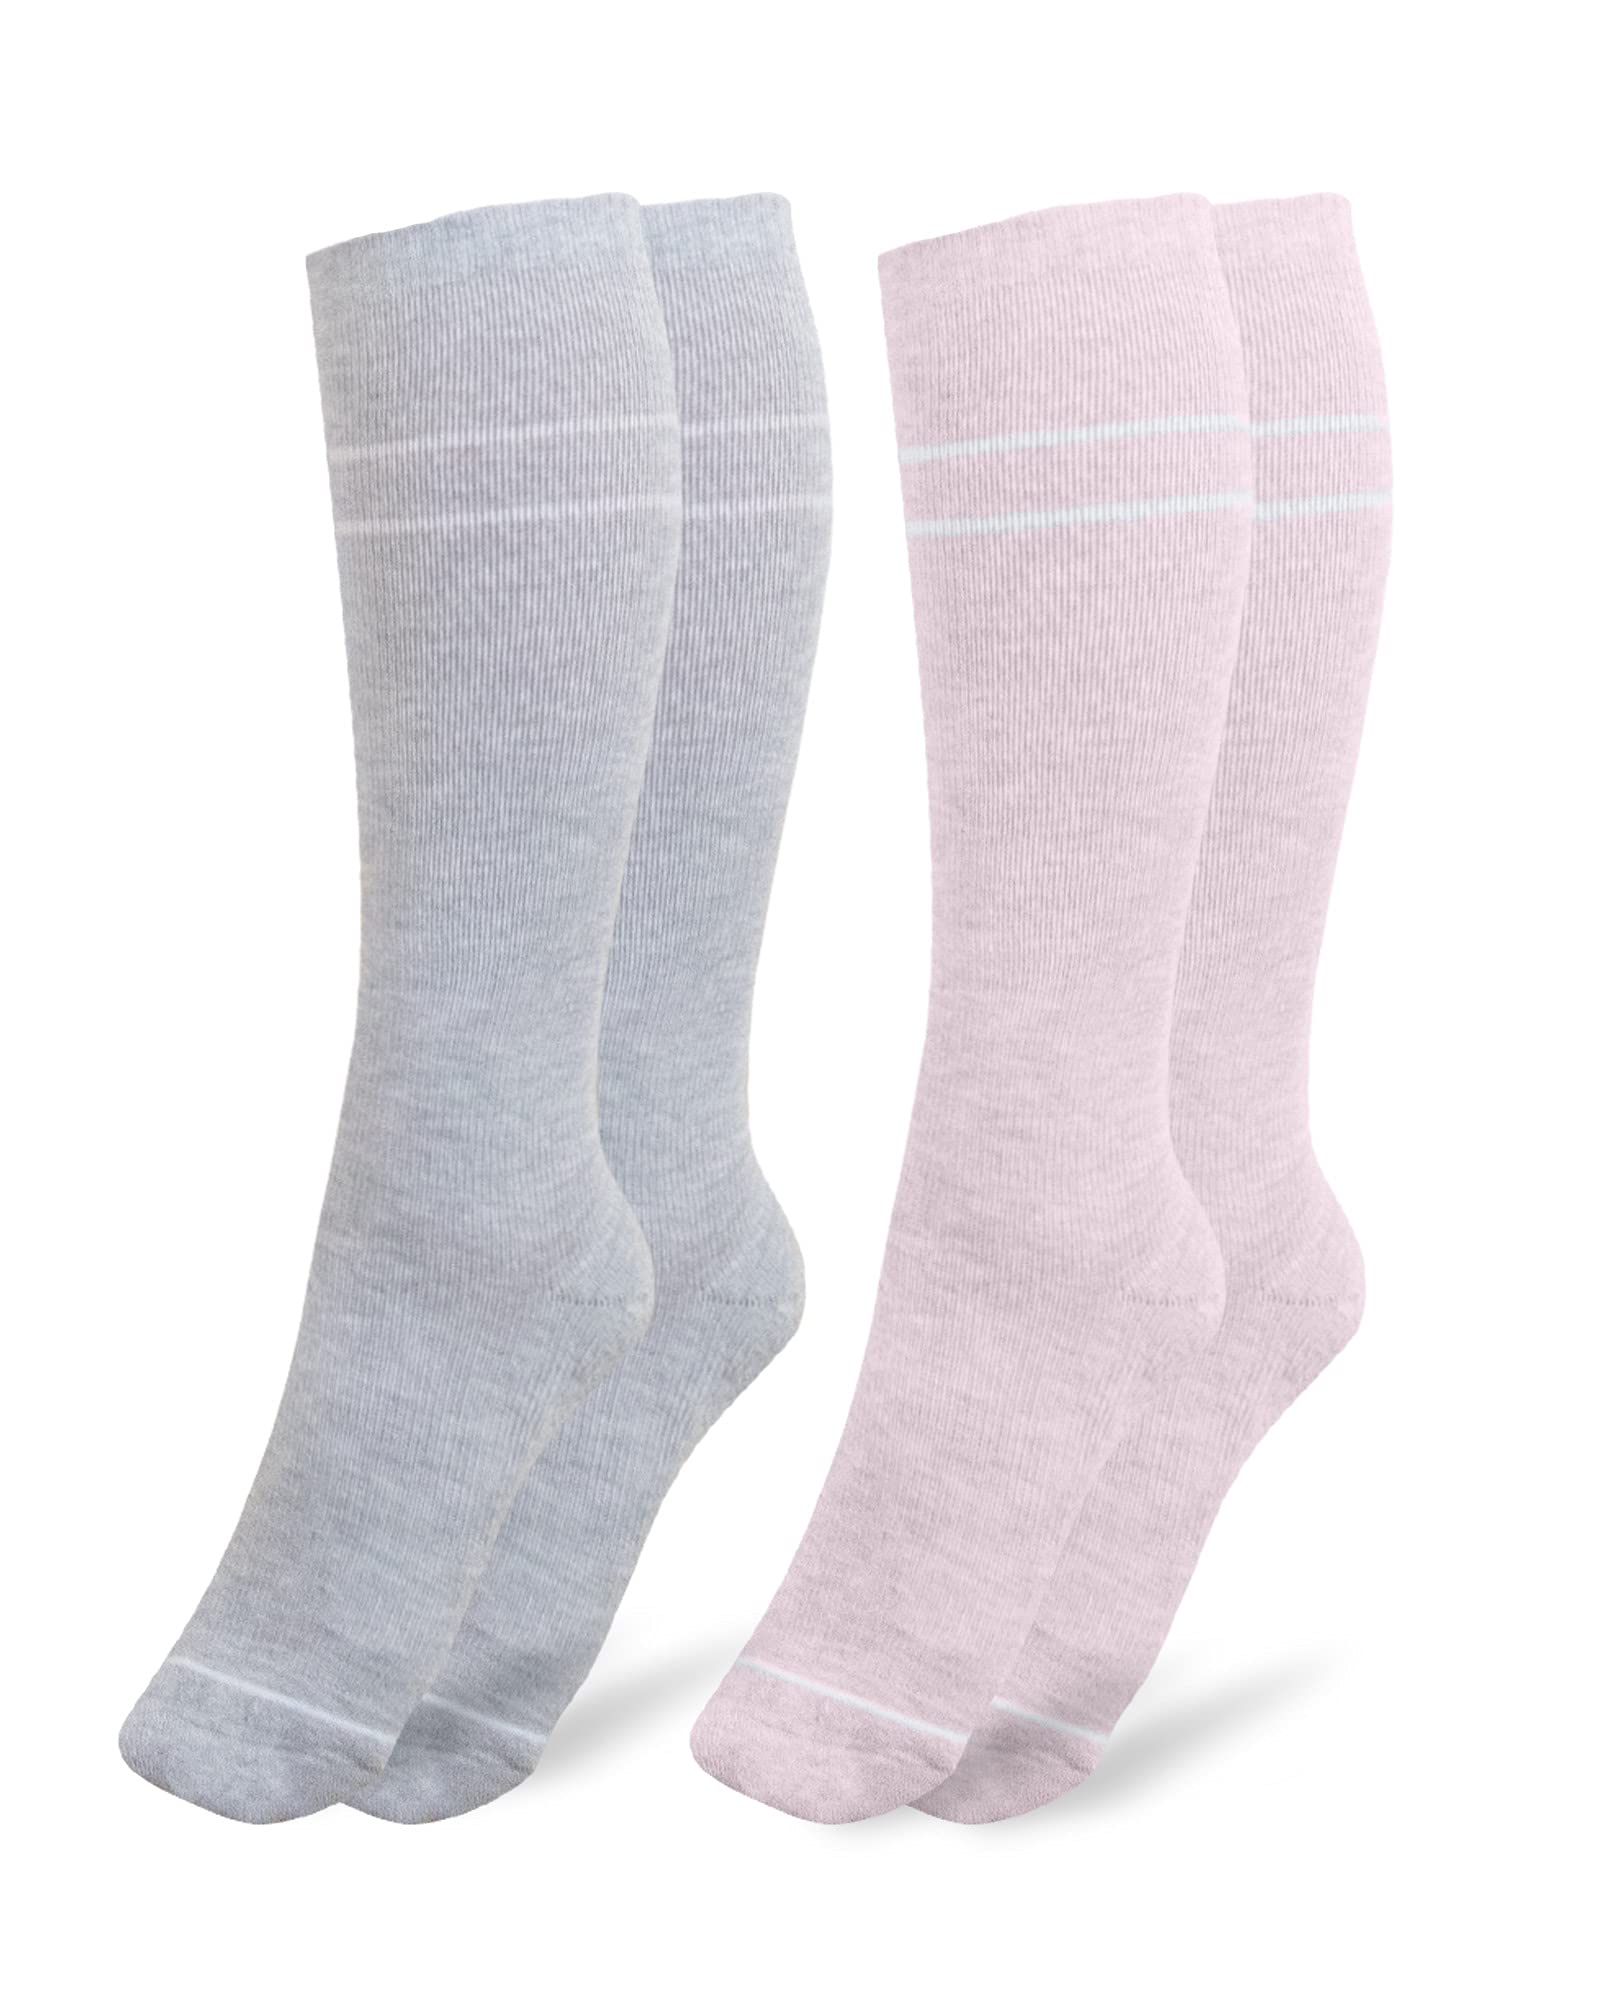 Kindred Bravely Maternity Compression Socks 2-Pack | 20-30 mmHg Compression Socks for Pregnancy (Pink & Grey Heather)